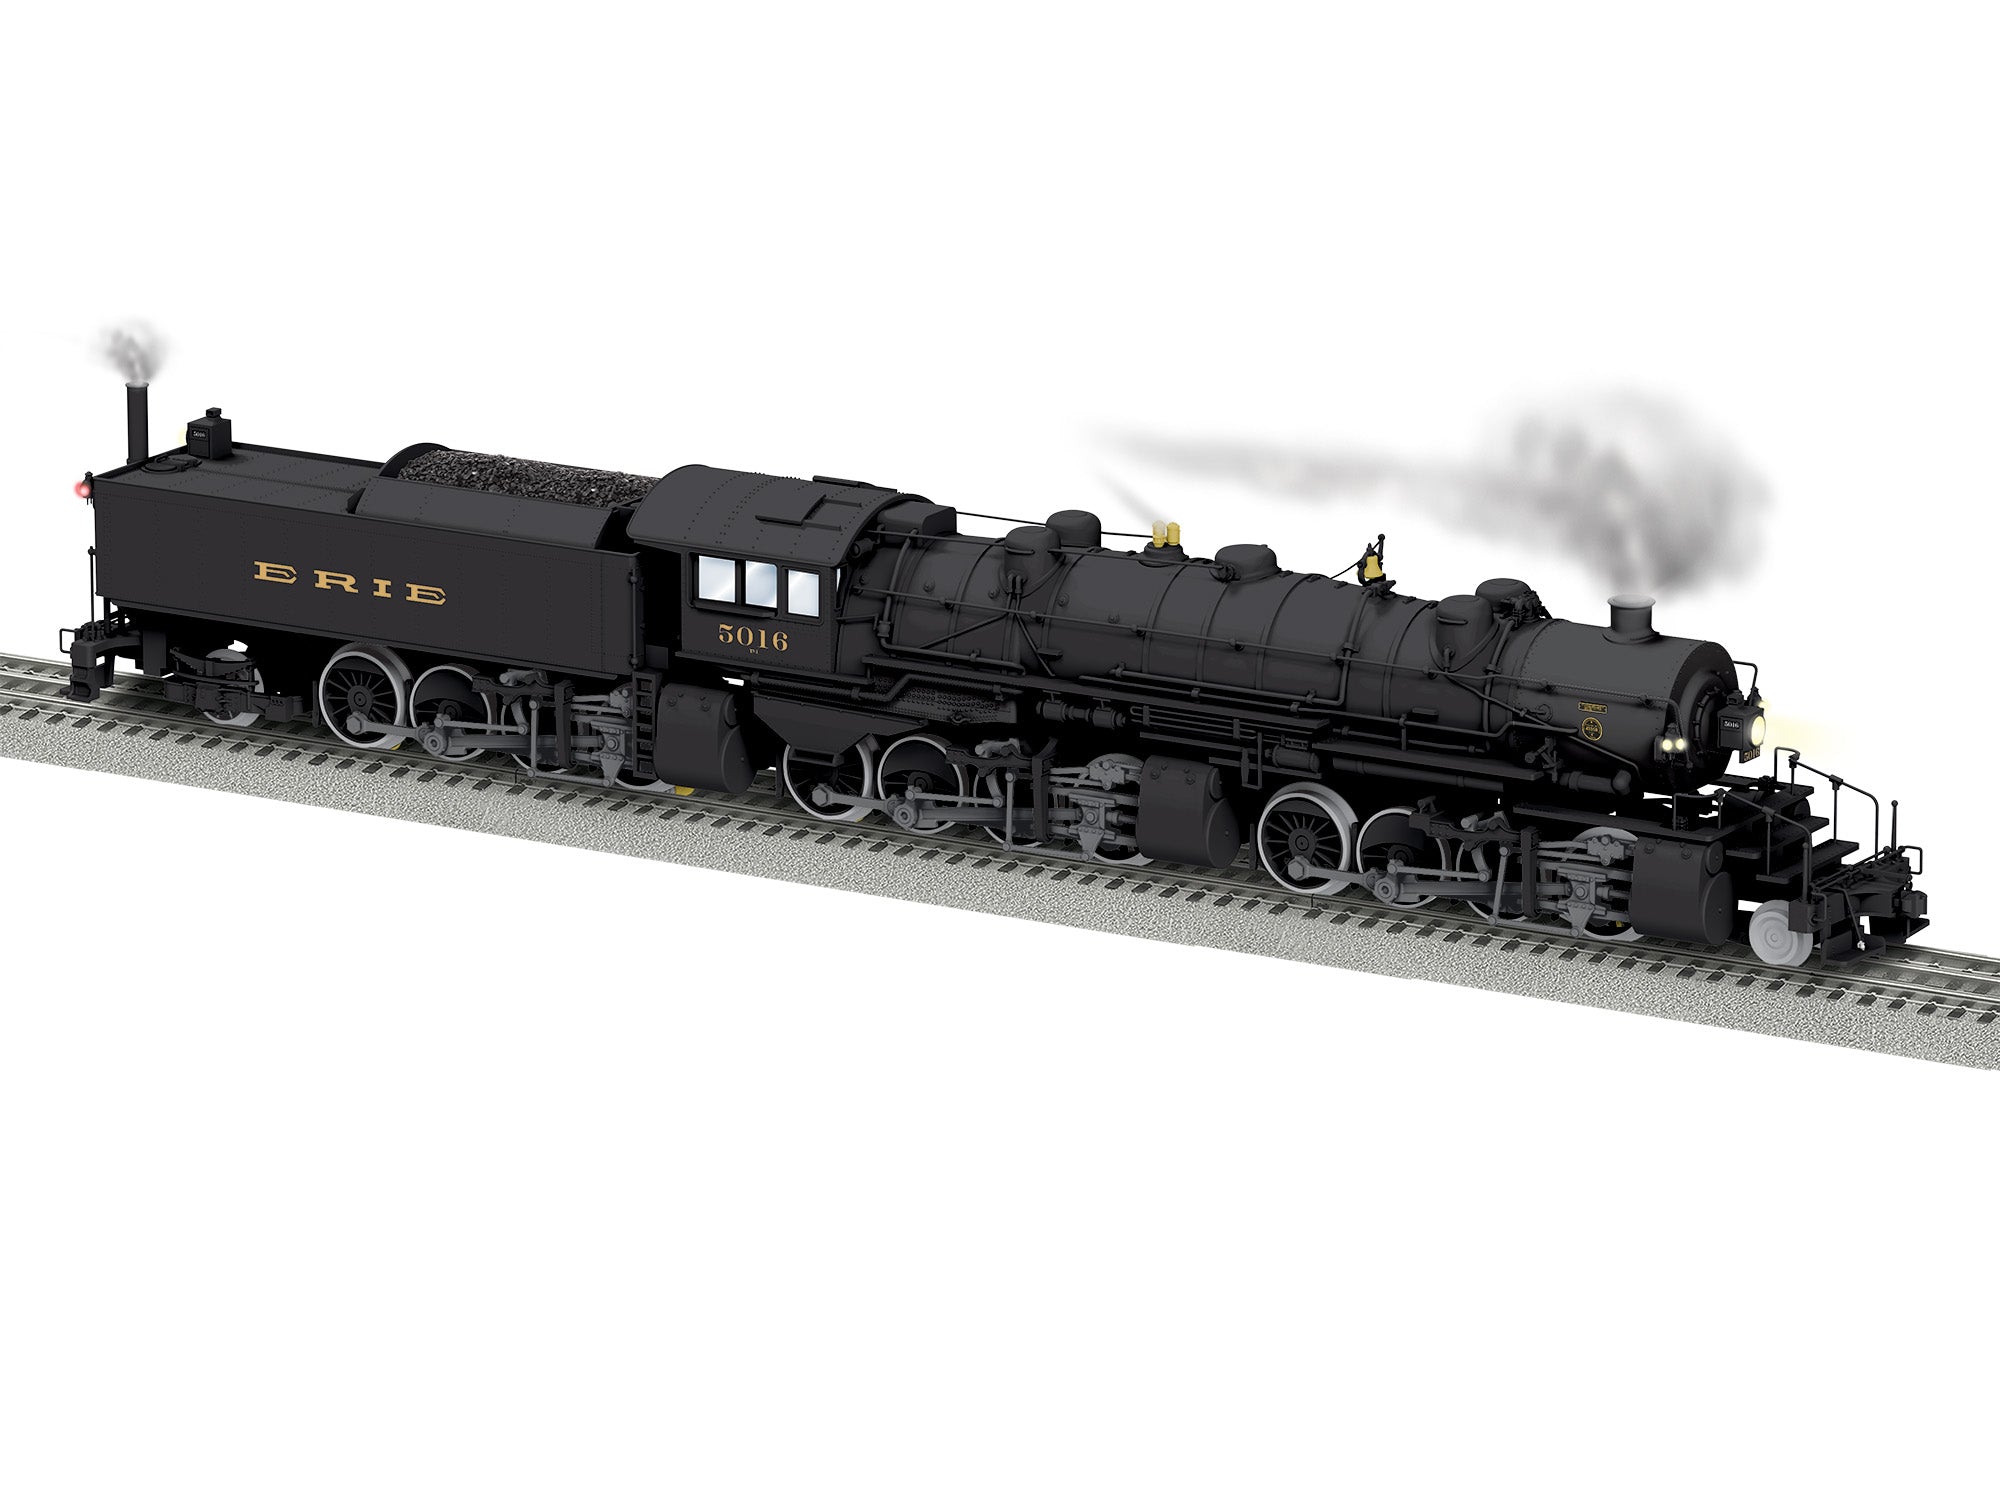 Lionel 2431040 - Vision Line Triplex Steam Locomotive "Erie" #5016